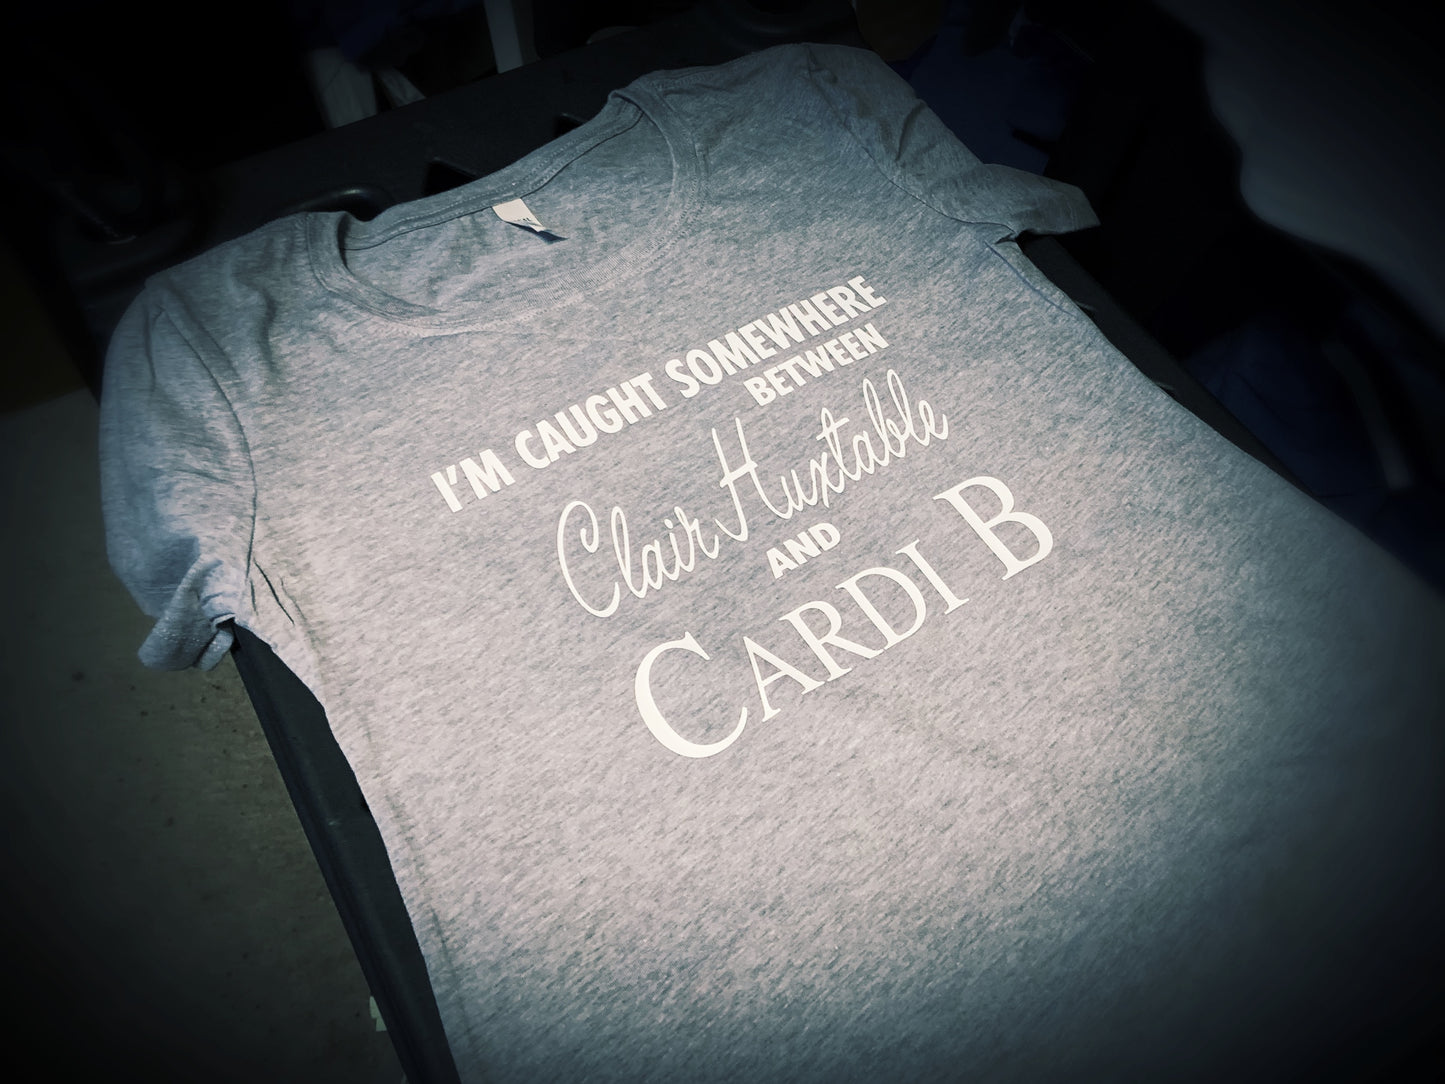 BLM - Between Clair and Cardi B T-Shirt